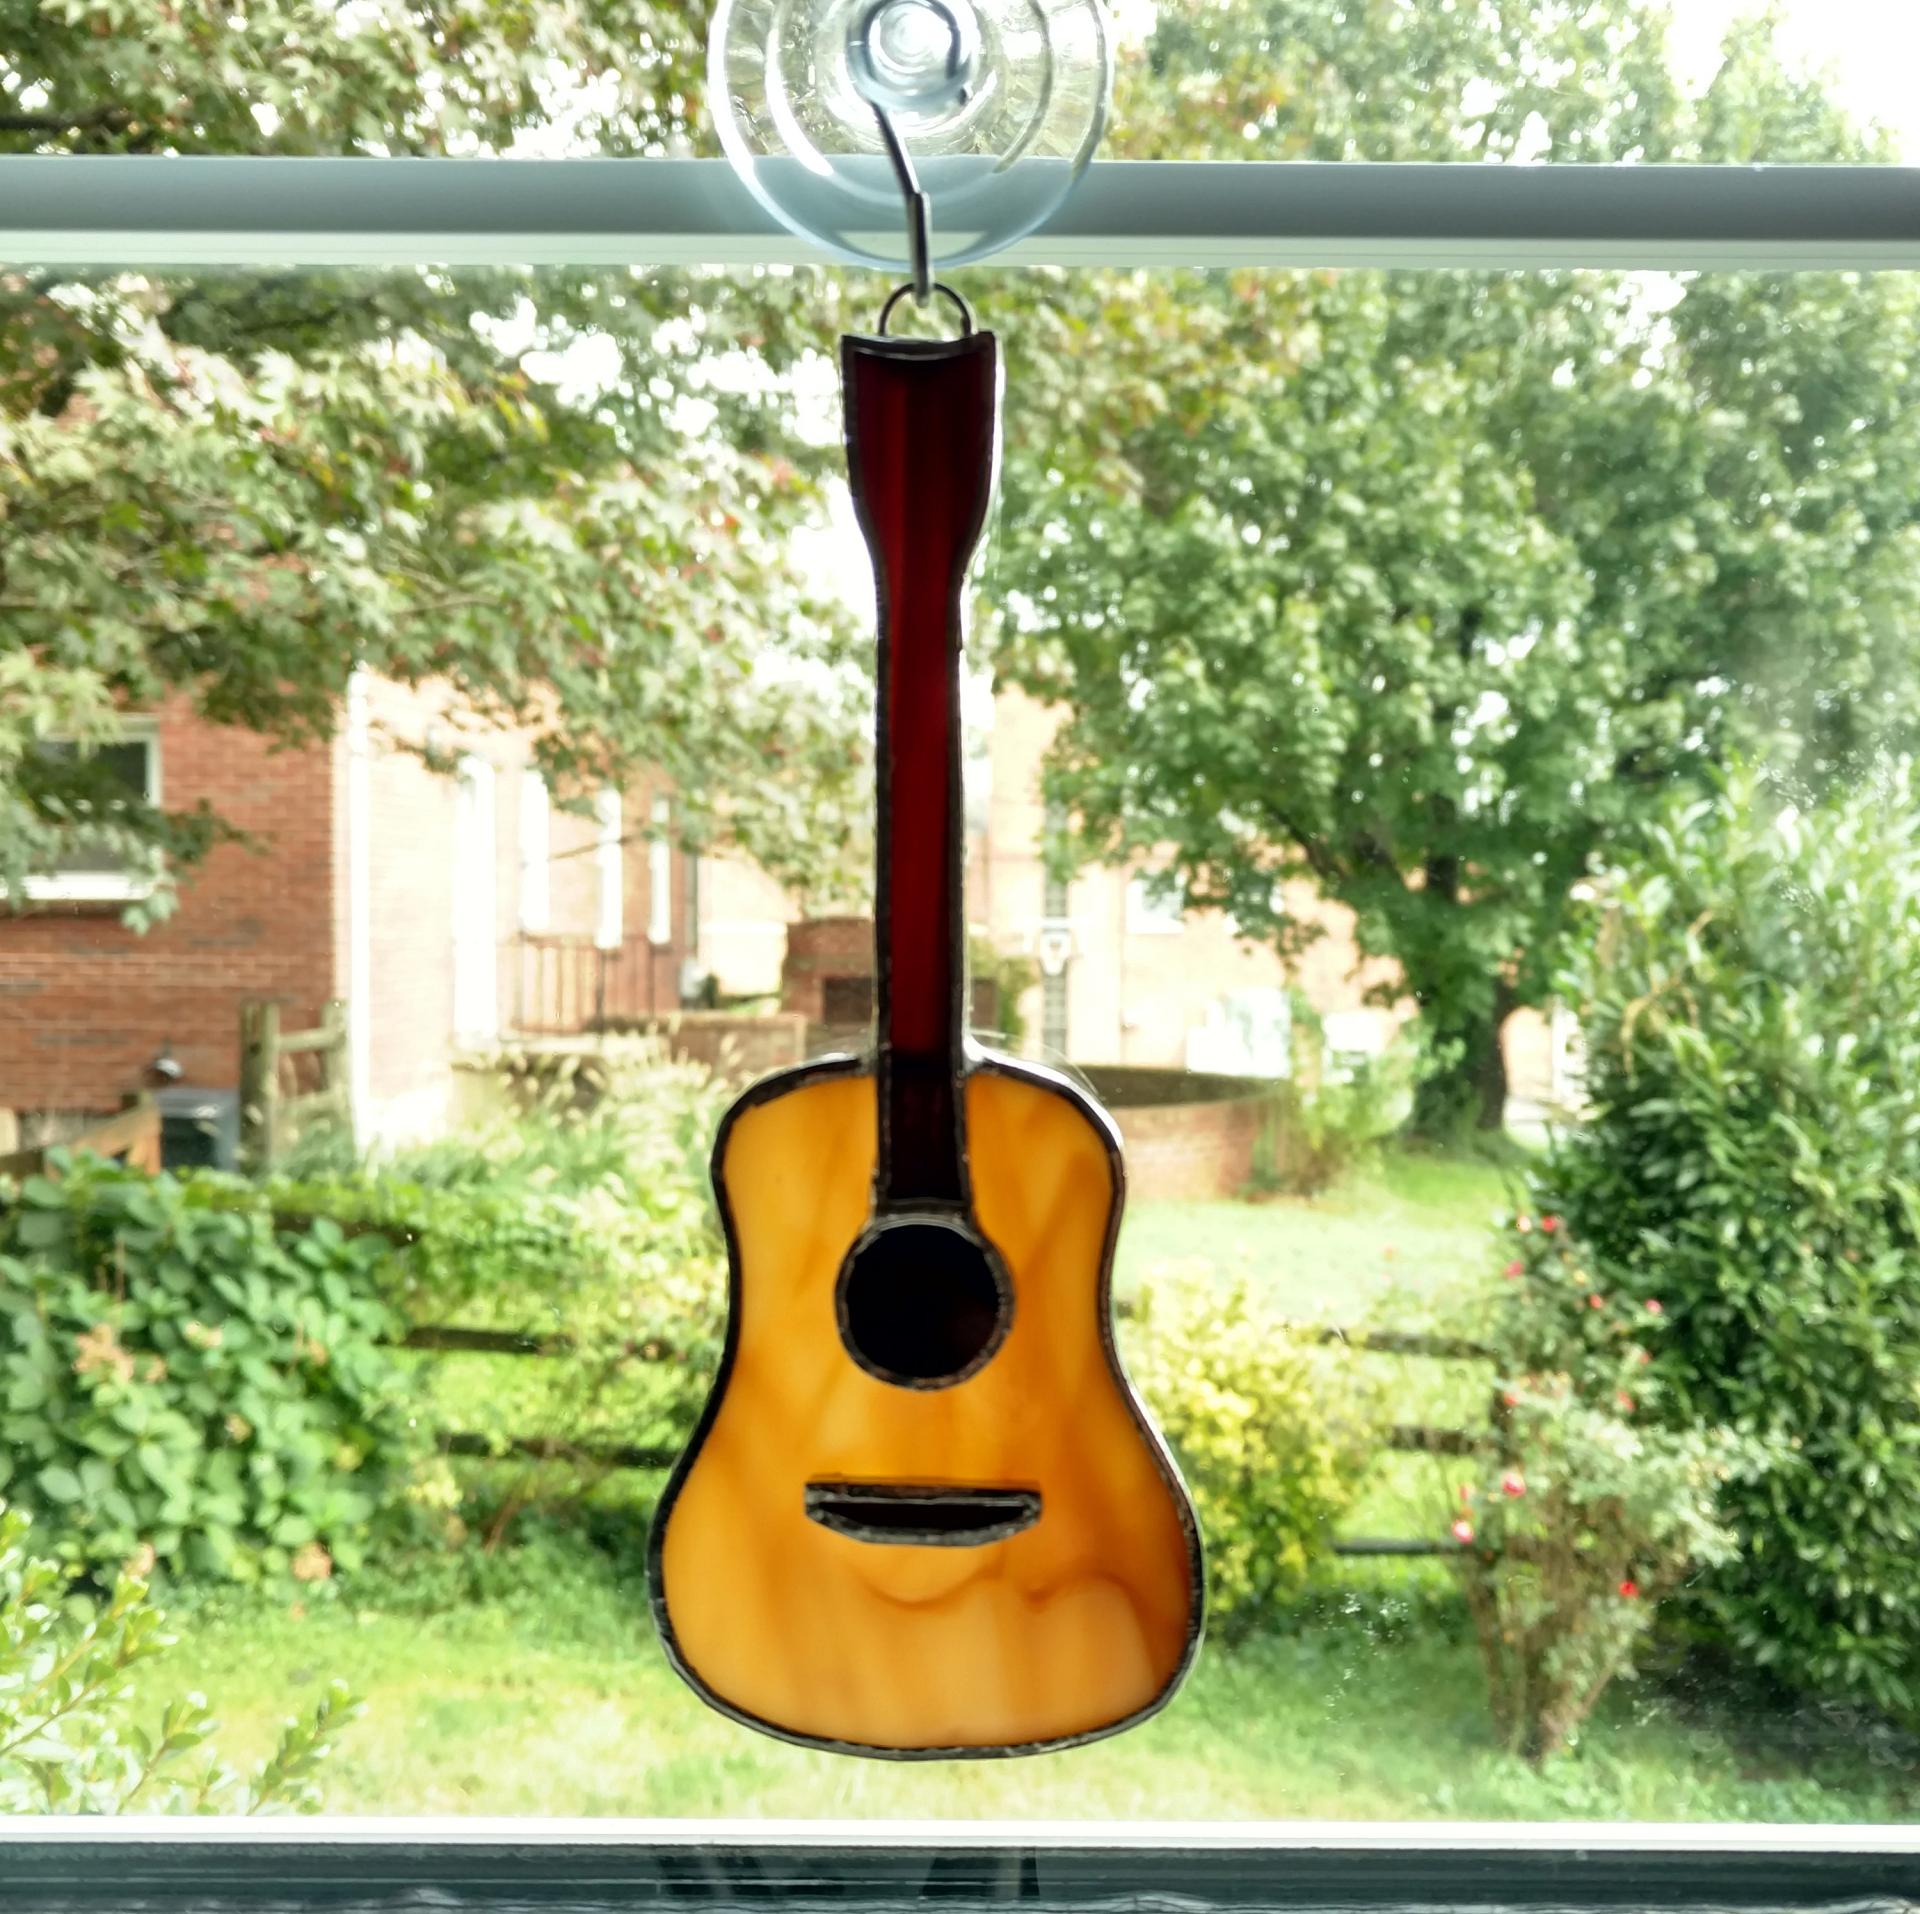 Stained Glass Guitar Suncatcher